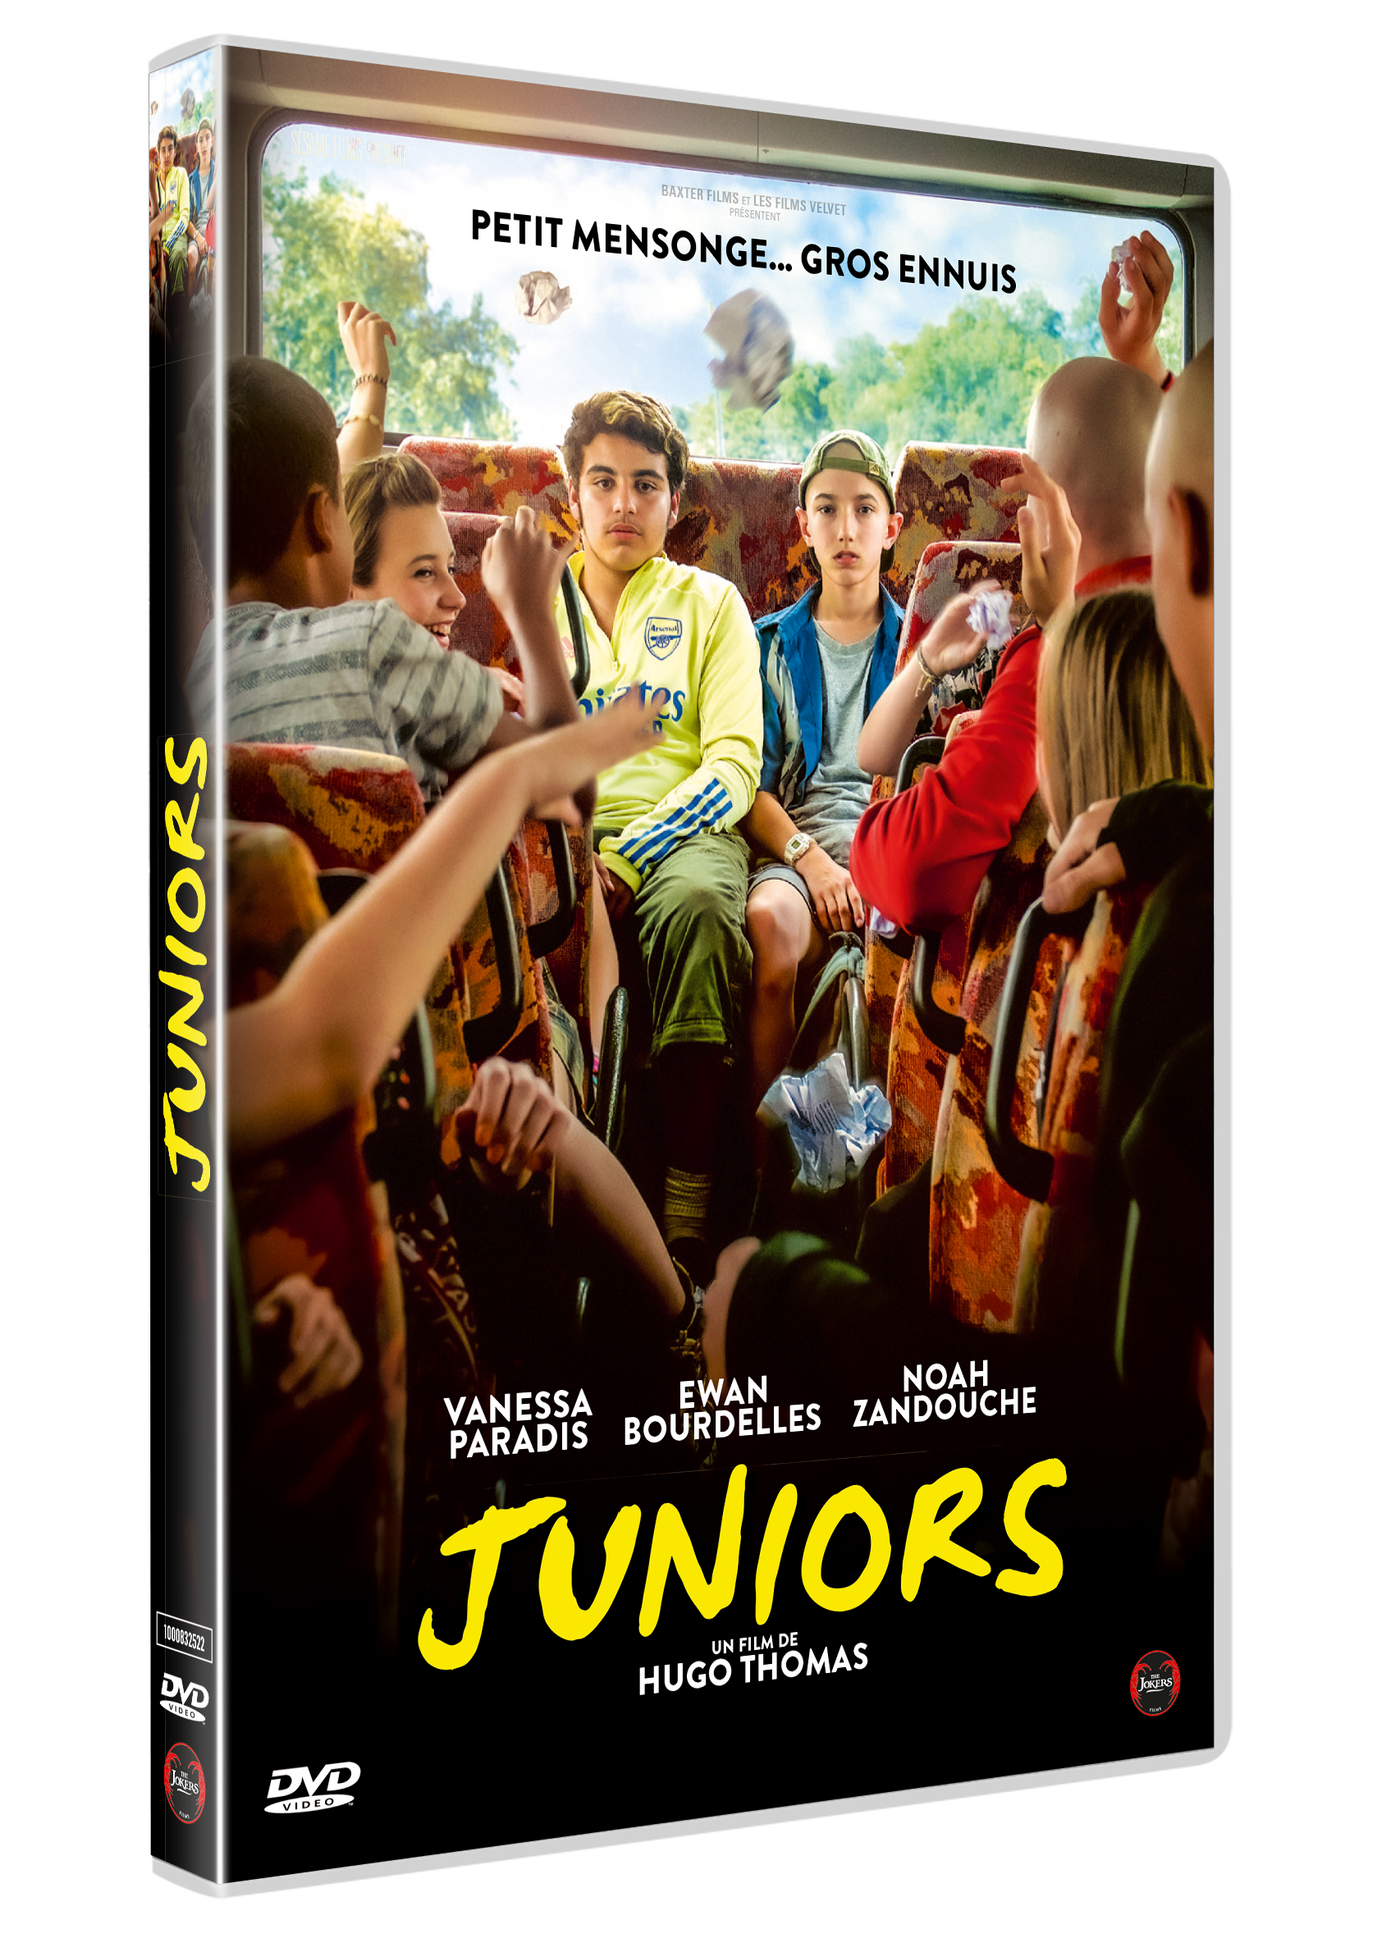 DVD "Juniors"